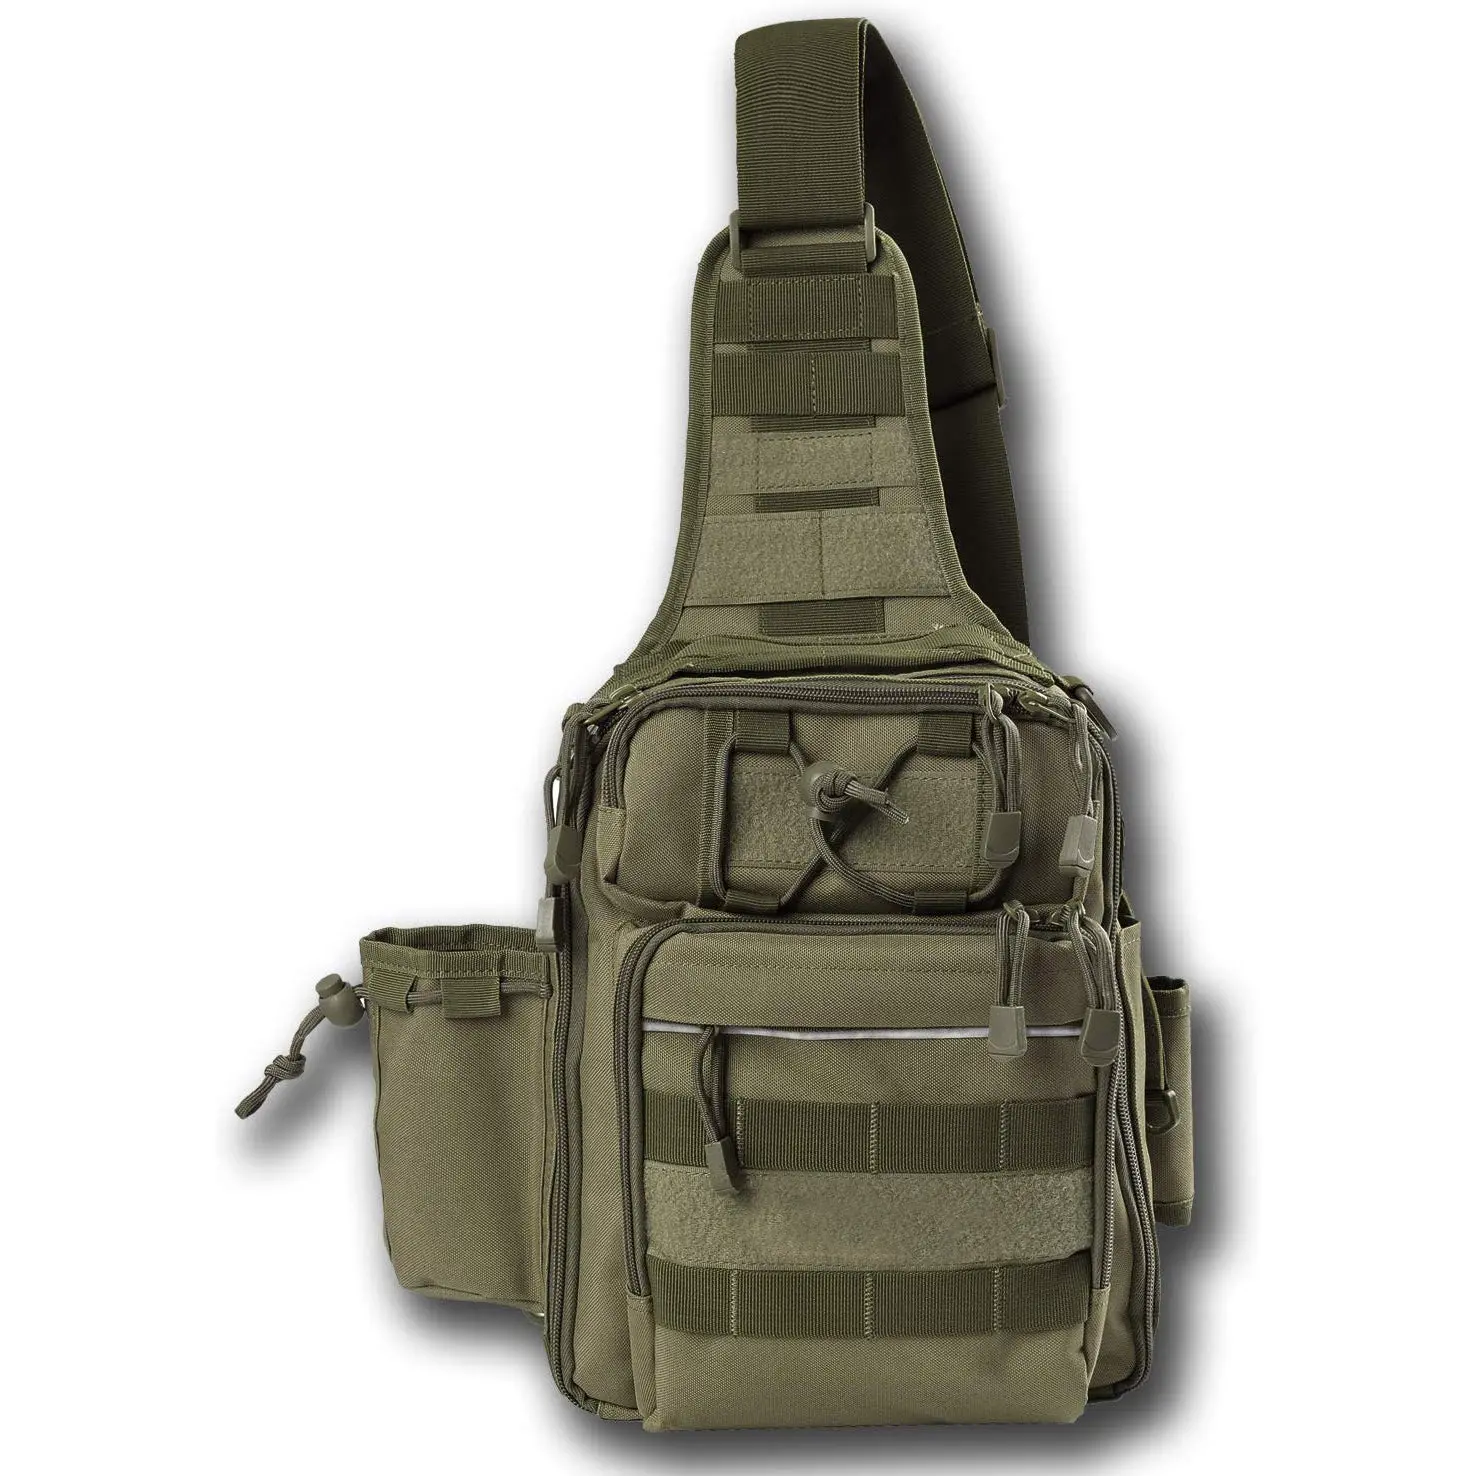 FREE SAMPLE Waterproof Sports Single Shoulder Fishing Tackle Bag Backpack